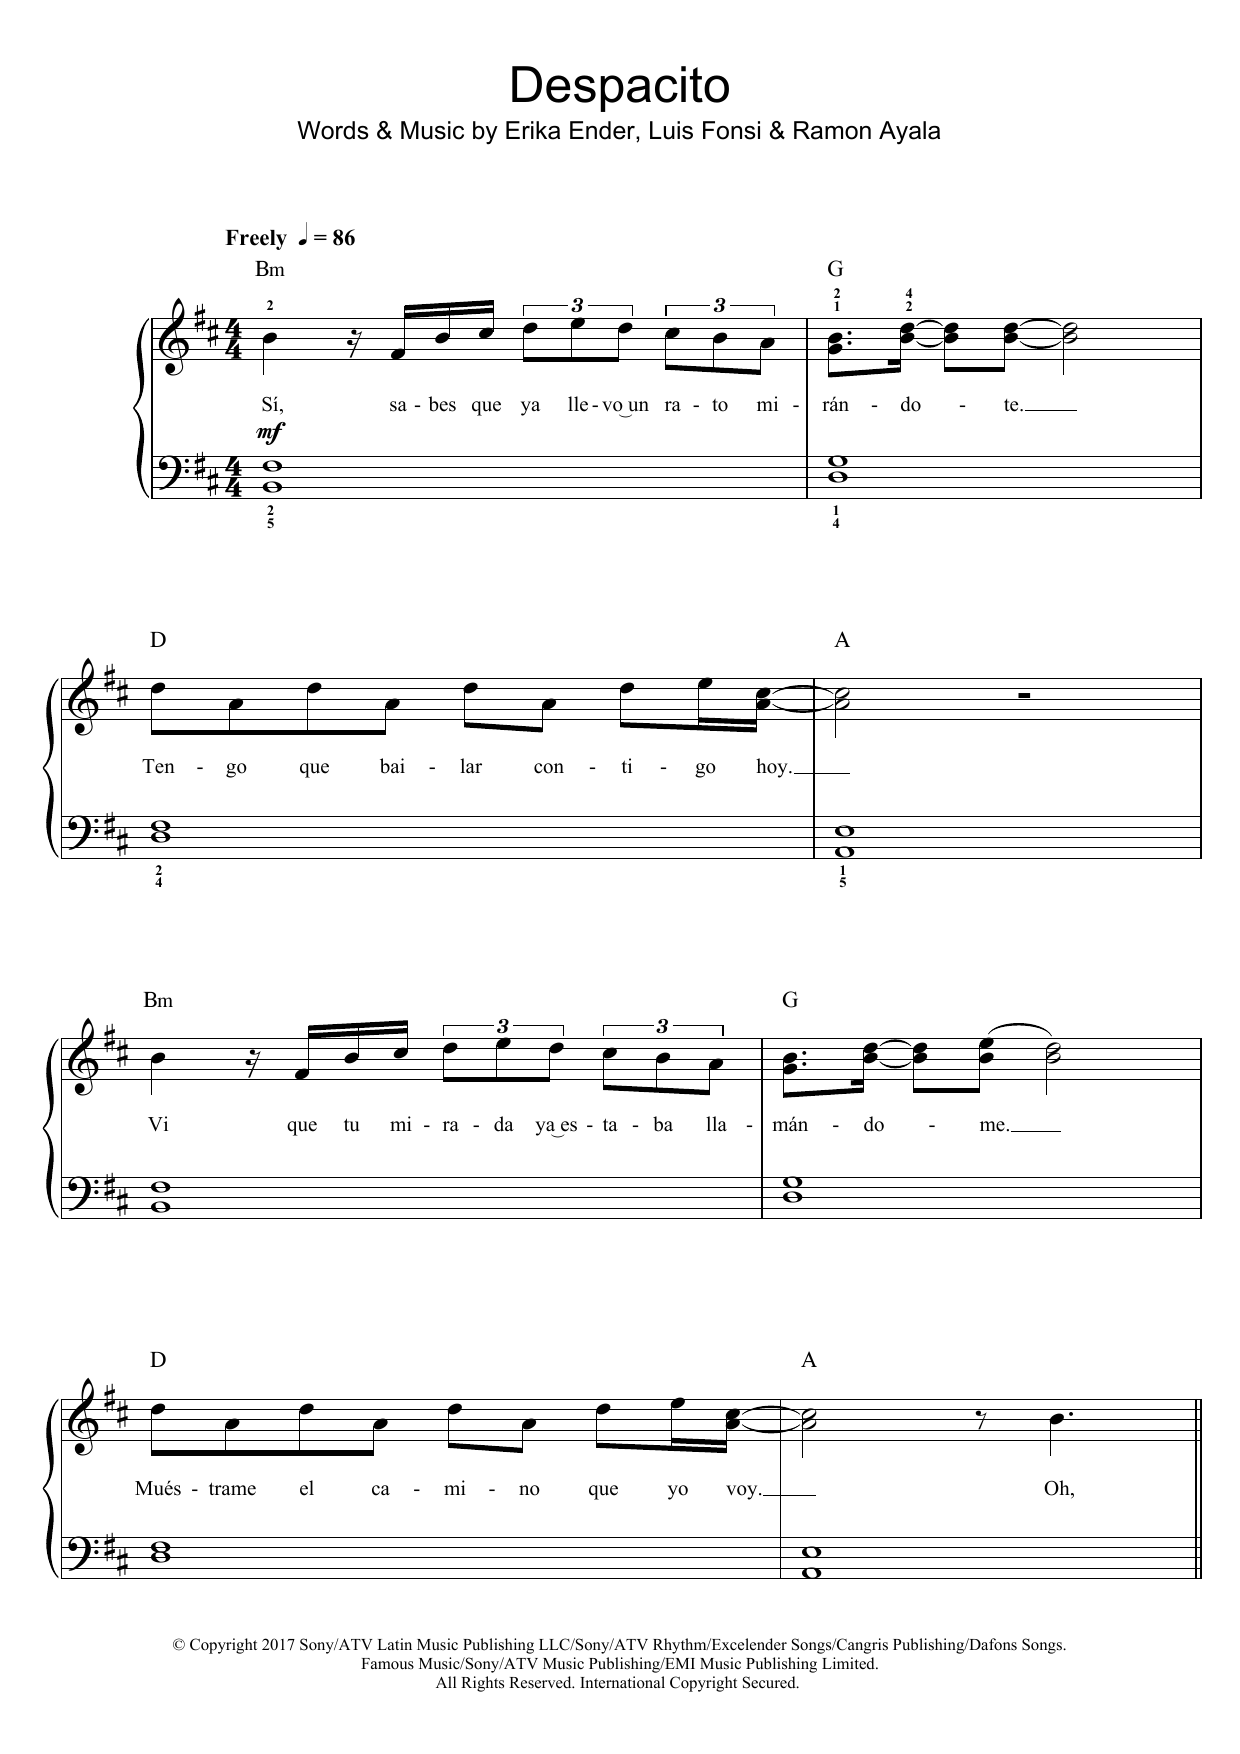 Luis Fonsi & Daddy Yankee feat. Justin Bieber Despacito Sheet Music Notes & Chords for Guitar Tab - Download or Print PDF